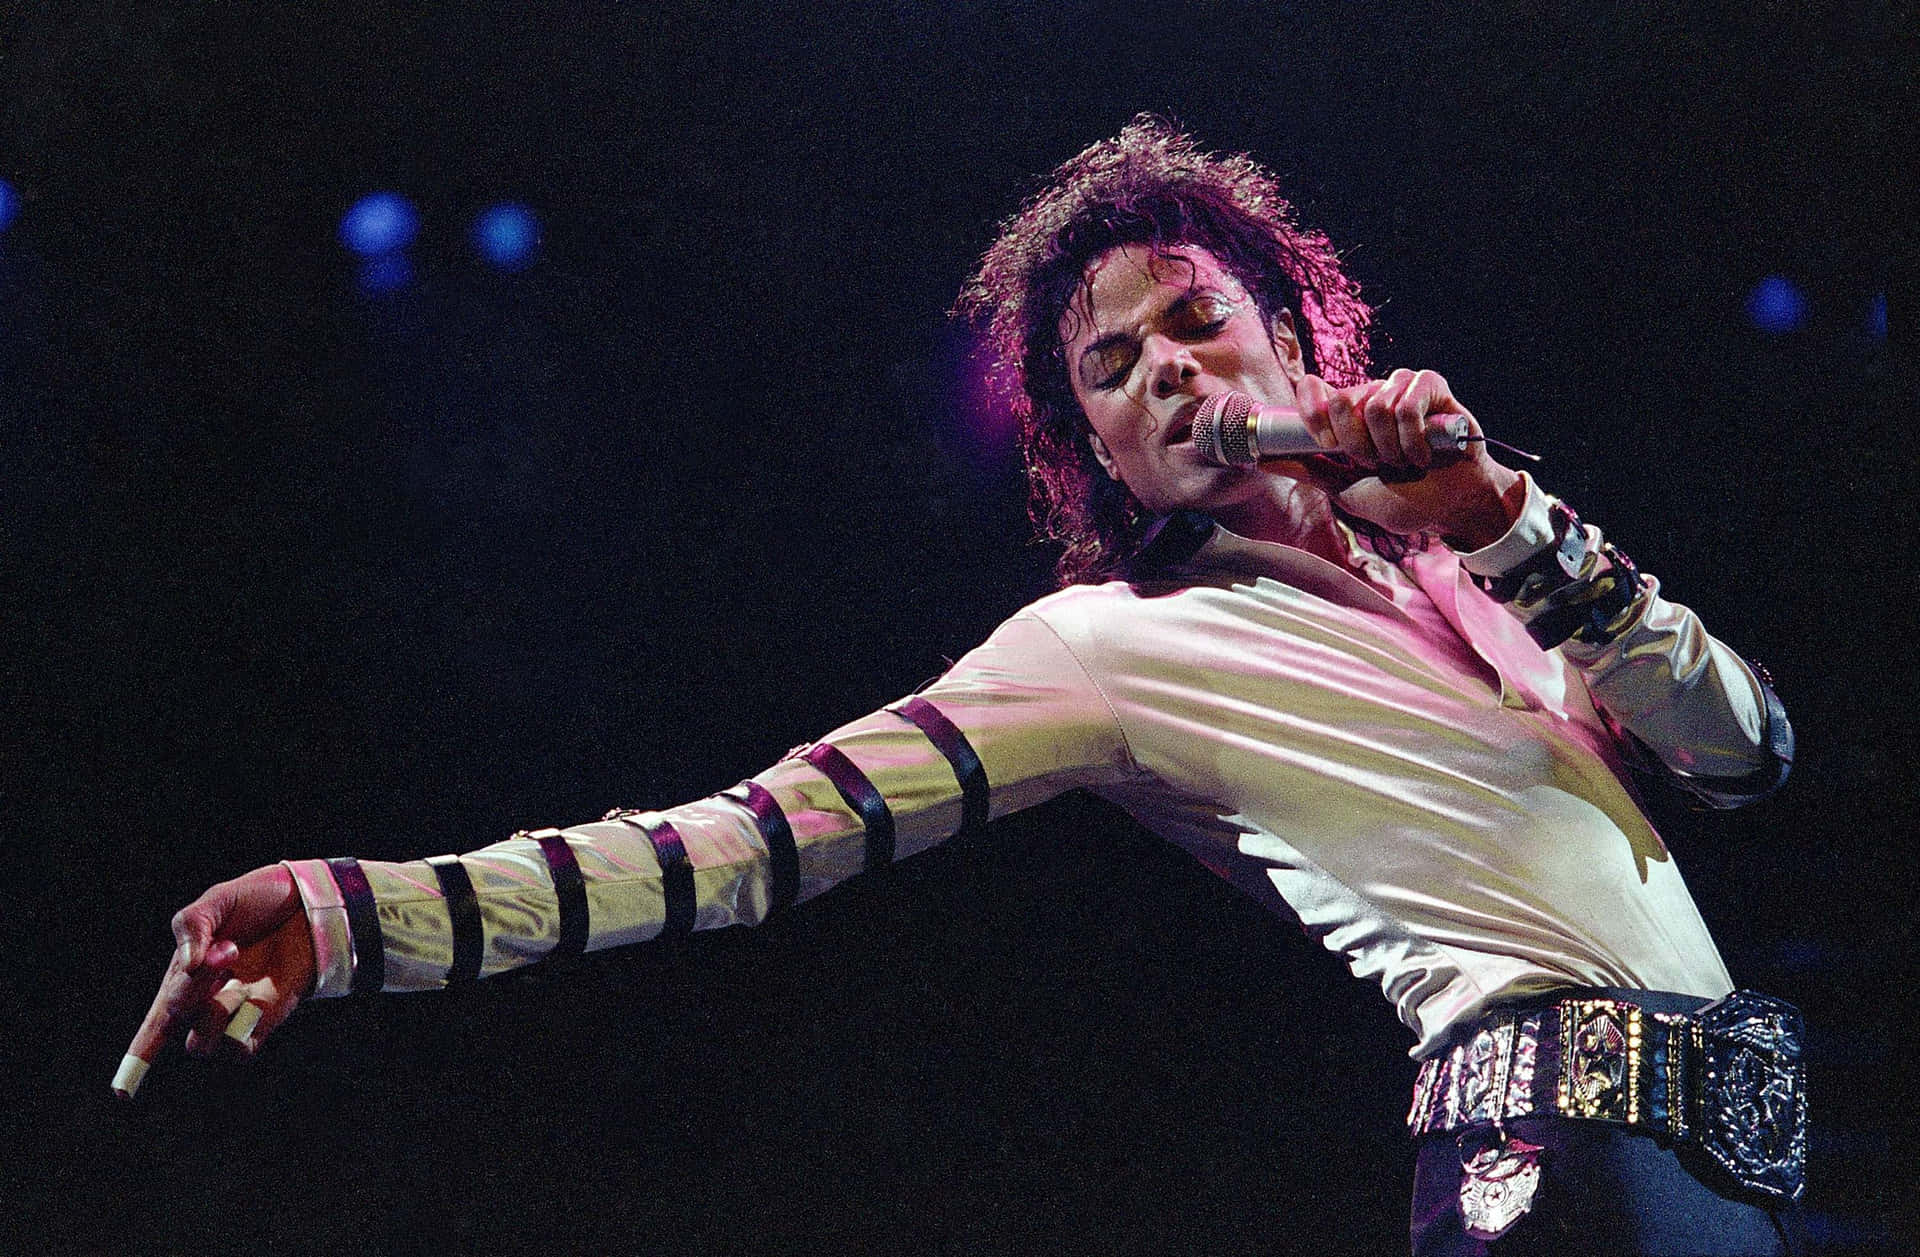 Michael Jackson's Magical Spells Captivating AD Crowds